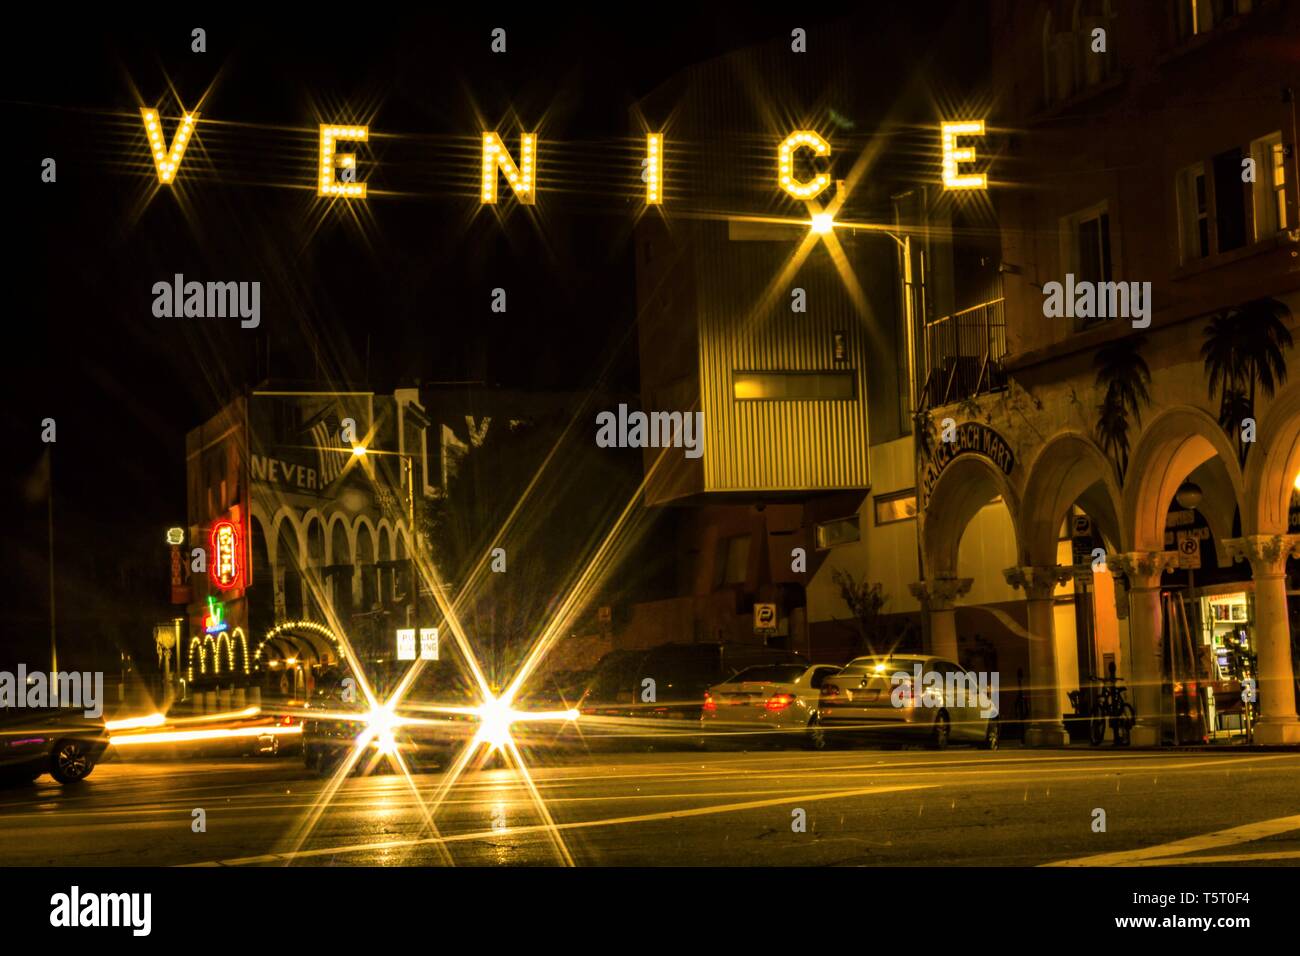 Illuminated street sign over cars' starburst lights mark entrance to Venice Beach, California Stock Photo